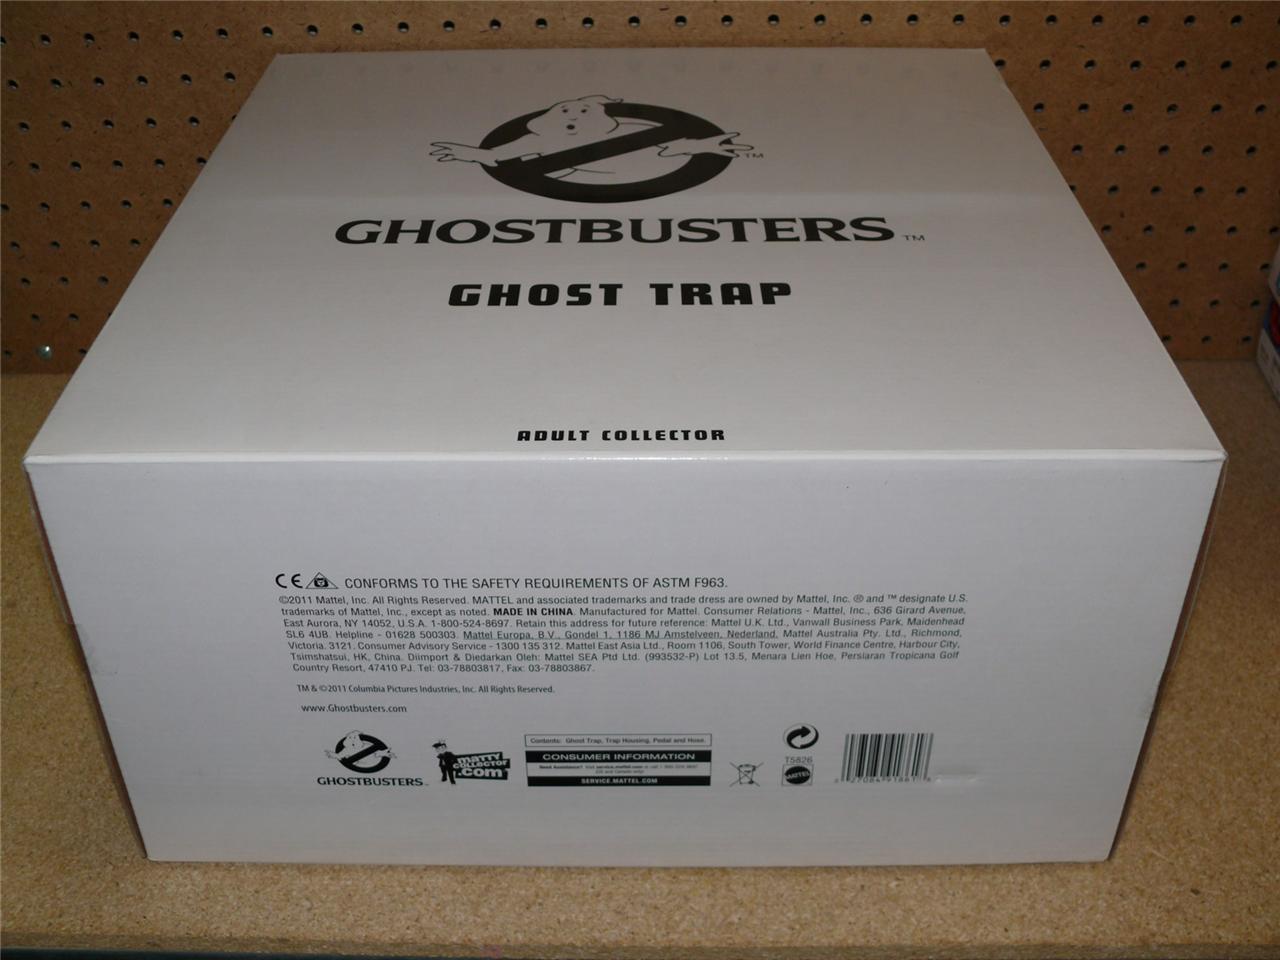 Ghostbusters Ghost Trap Replica